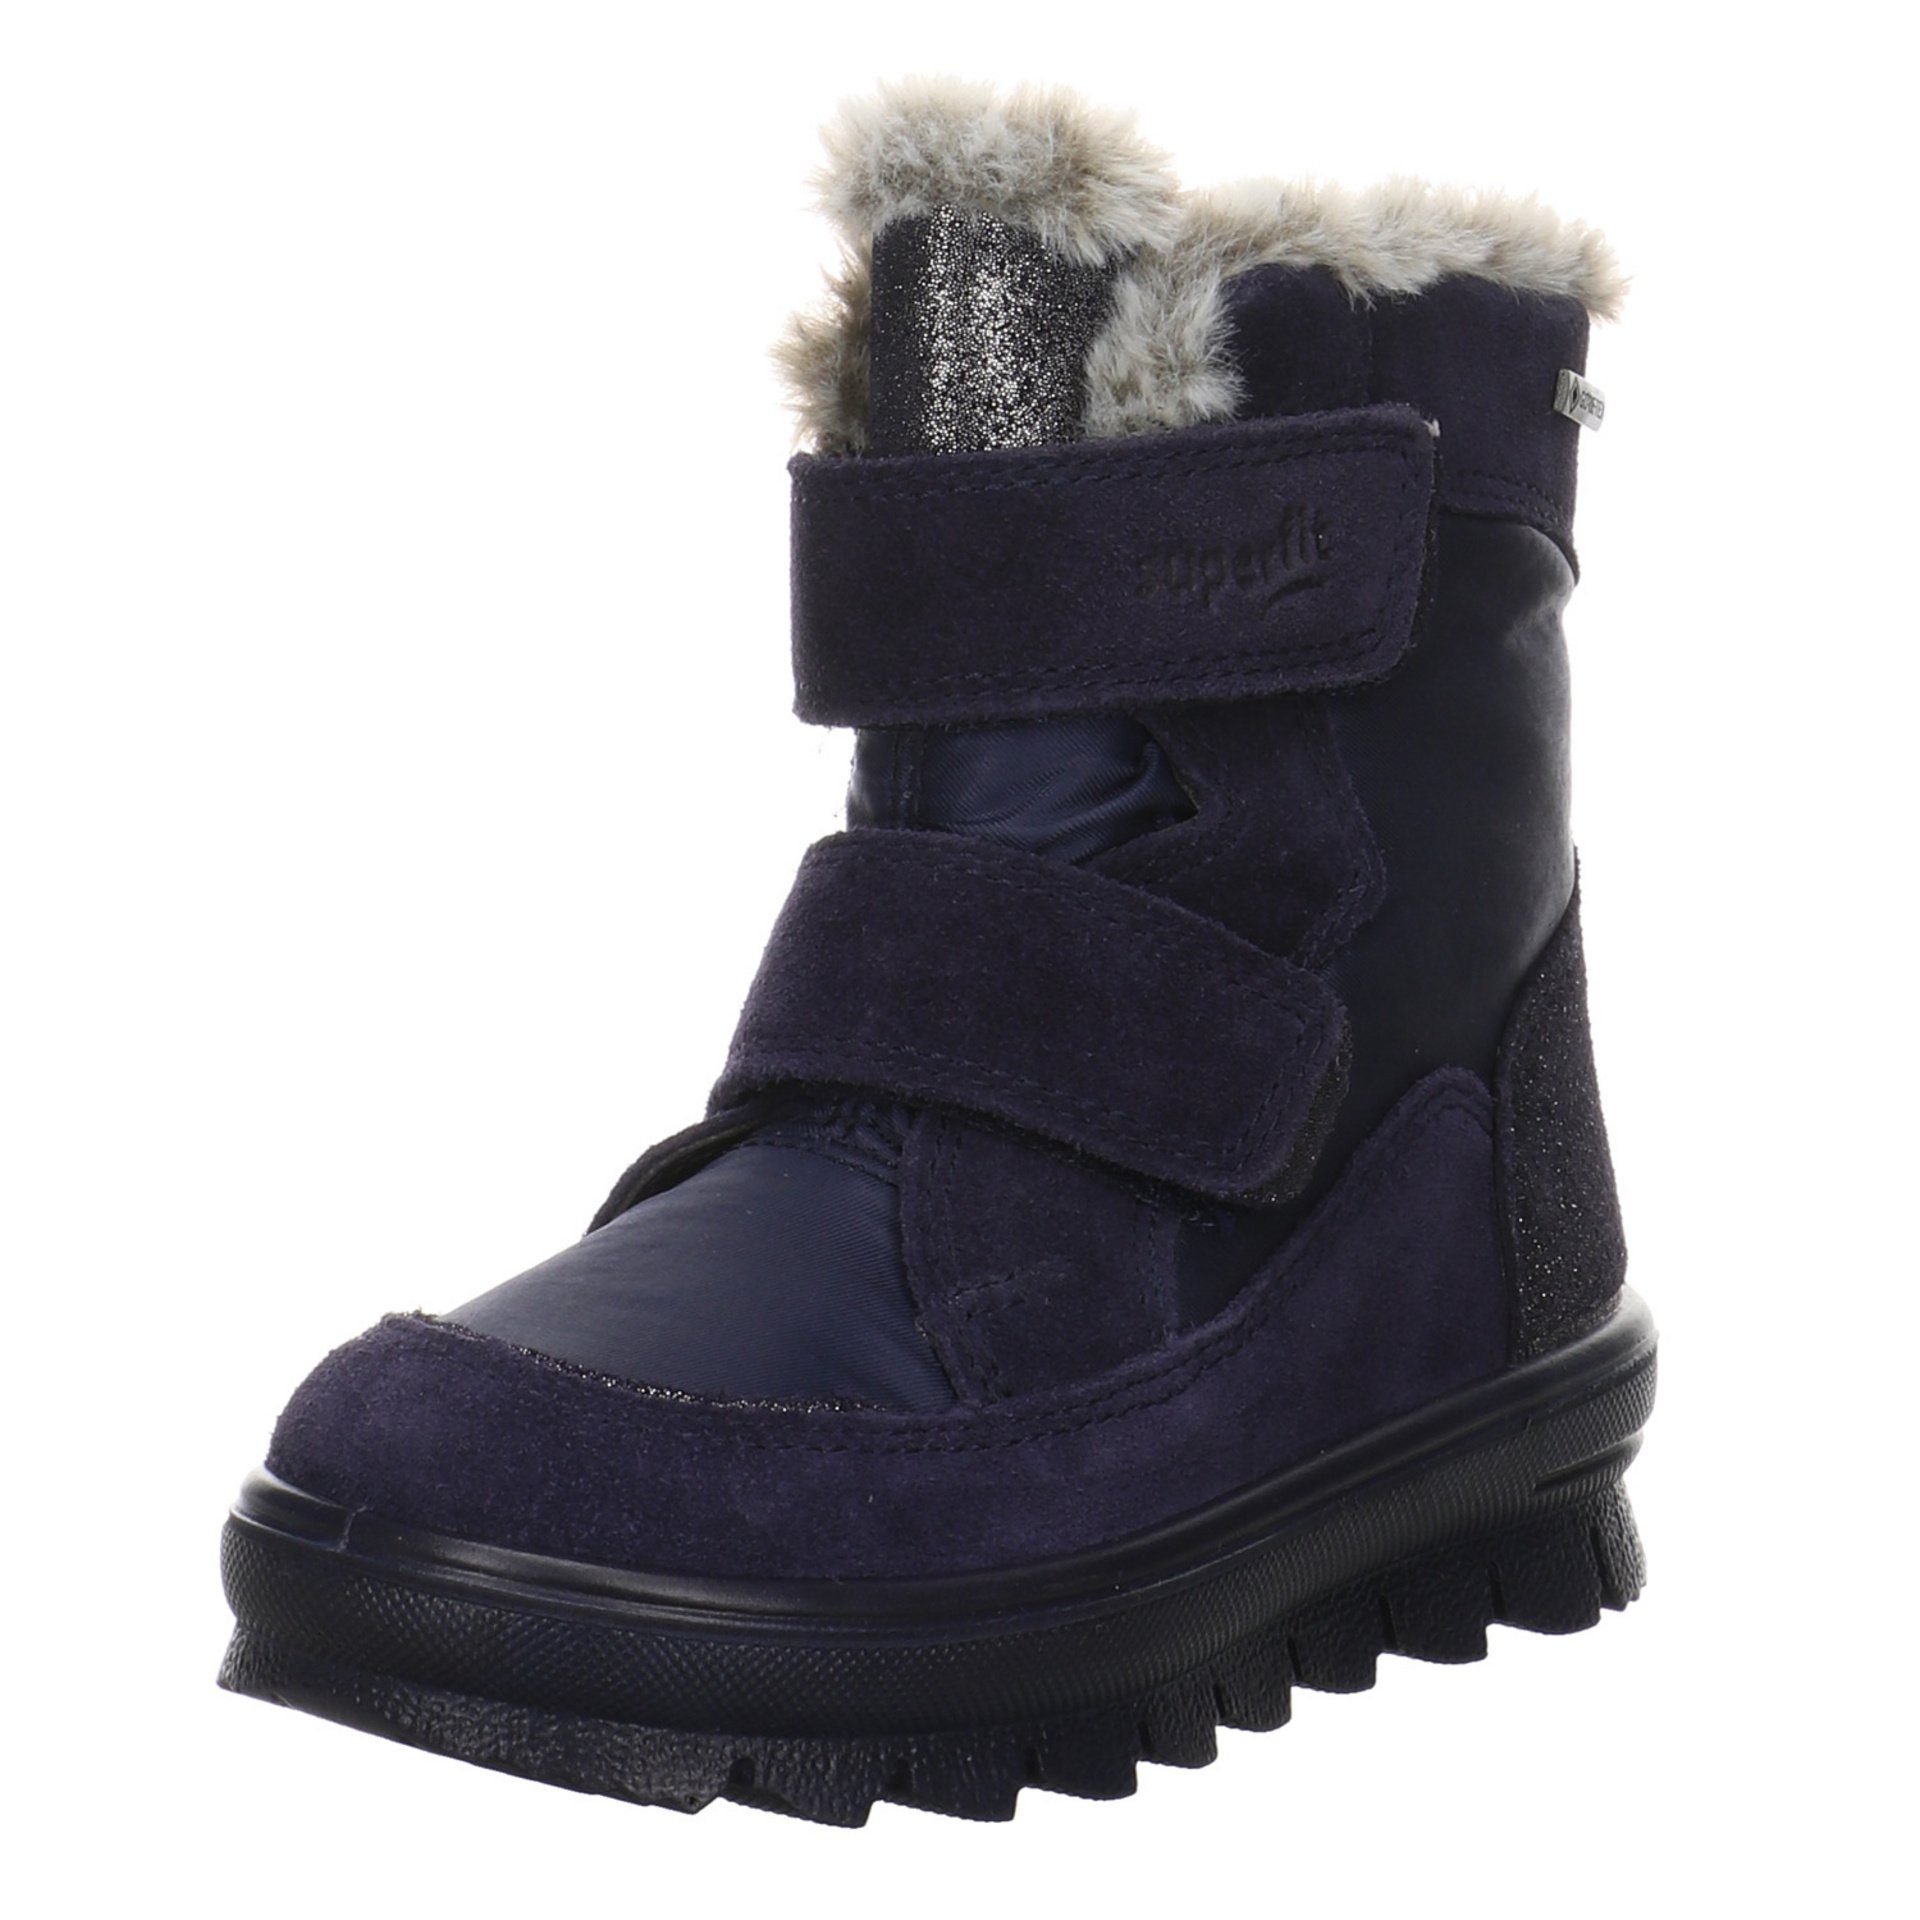 Superfit Flavia Boots Leder-/Textilkombination uni Winterboots Leder-/Textilkombination blau